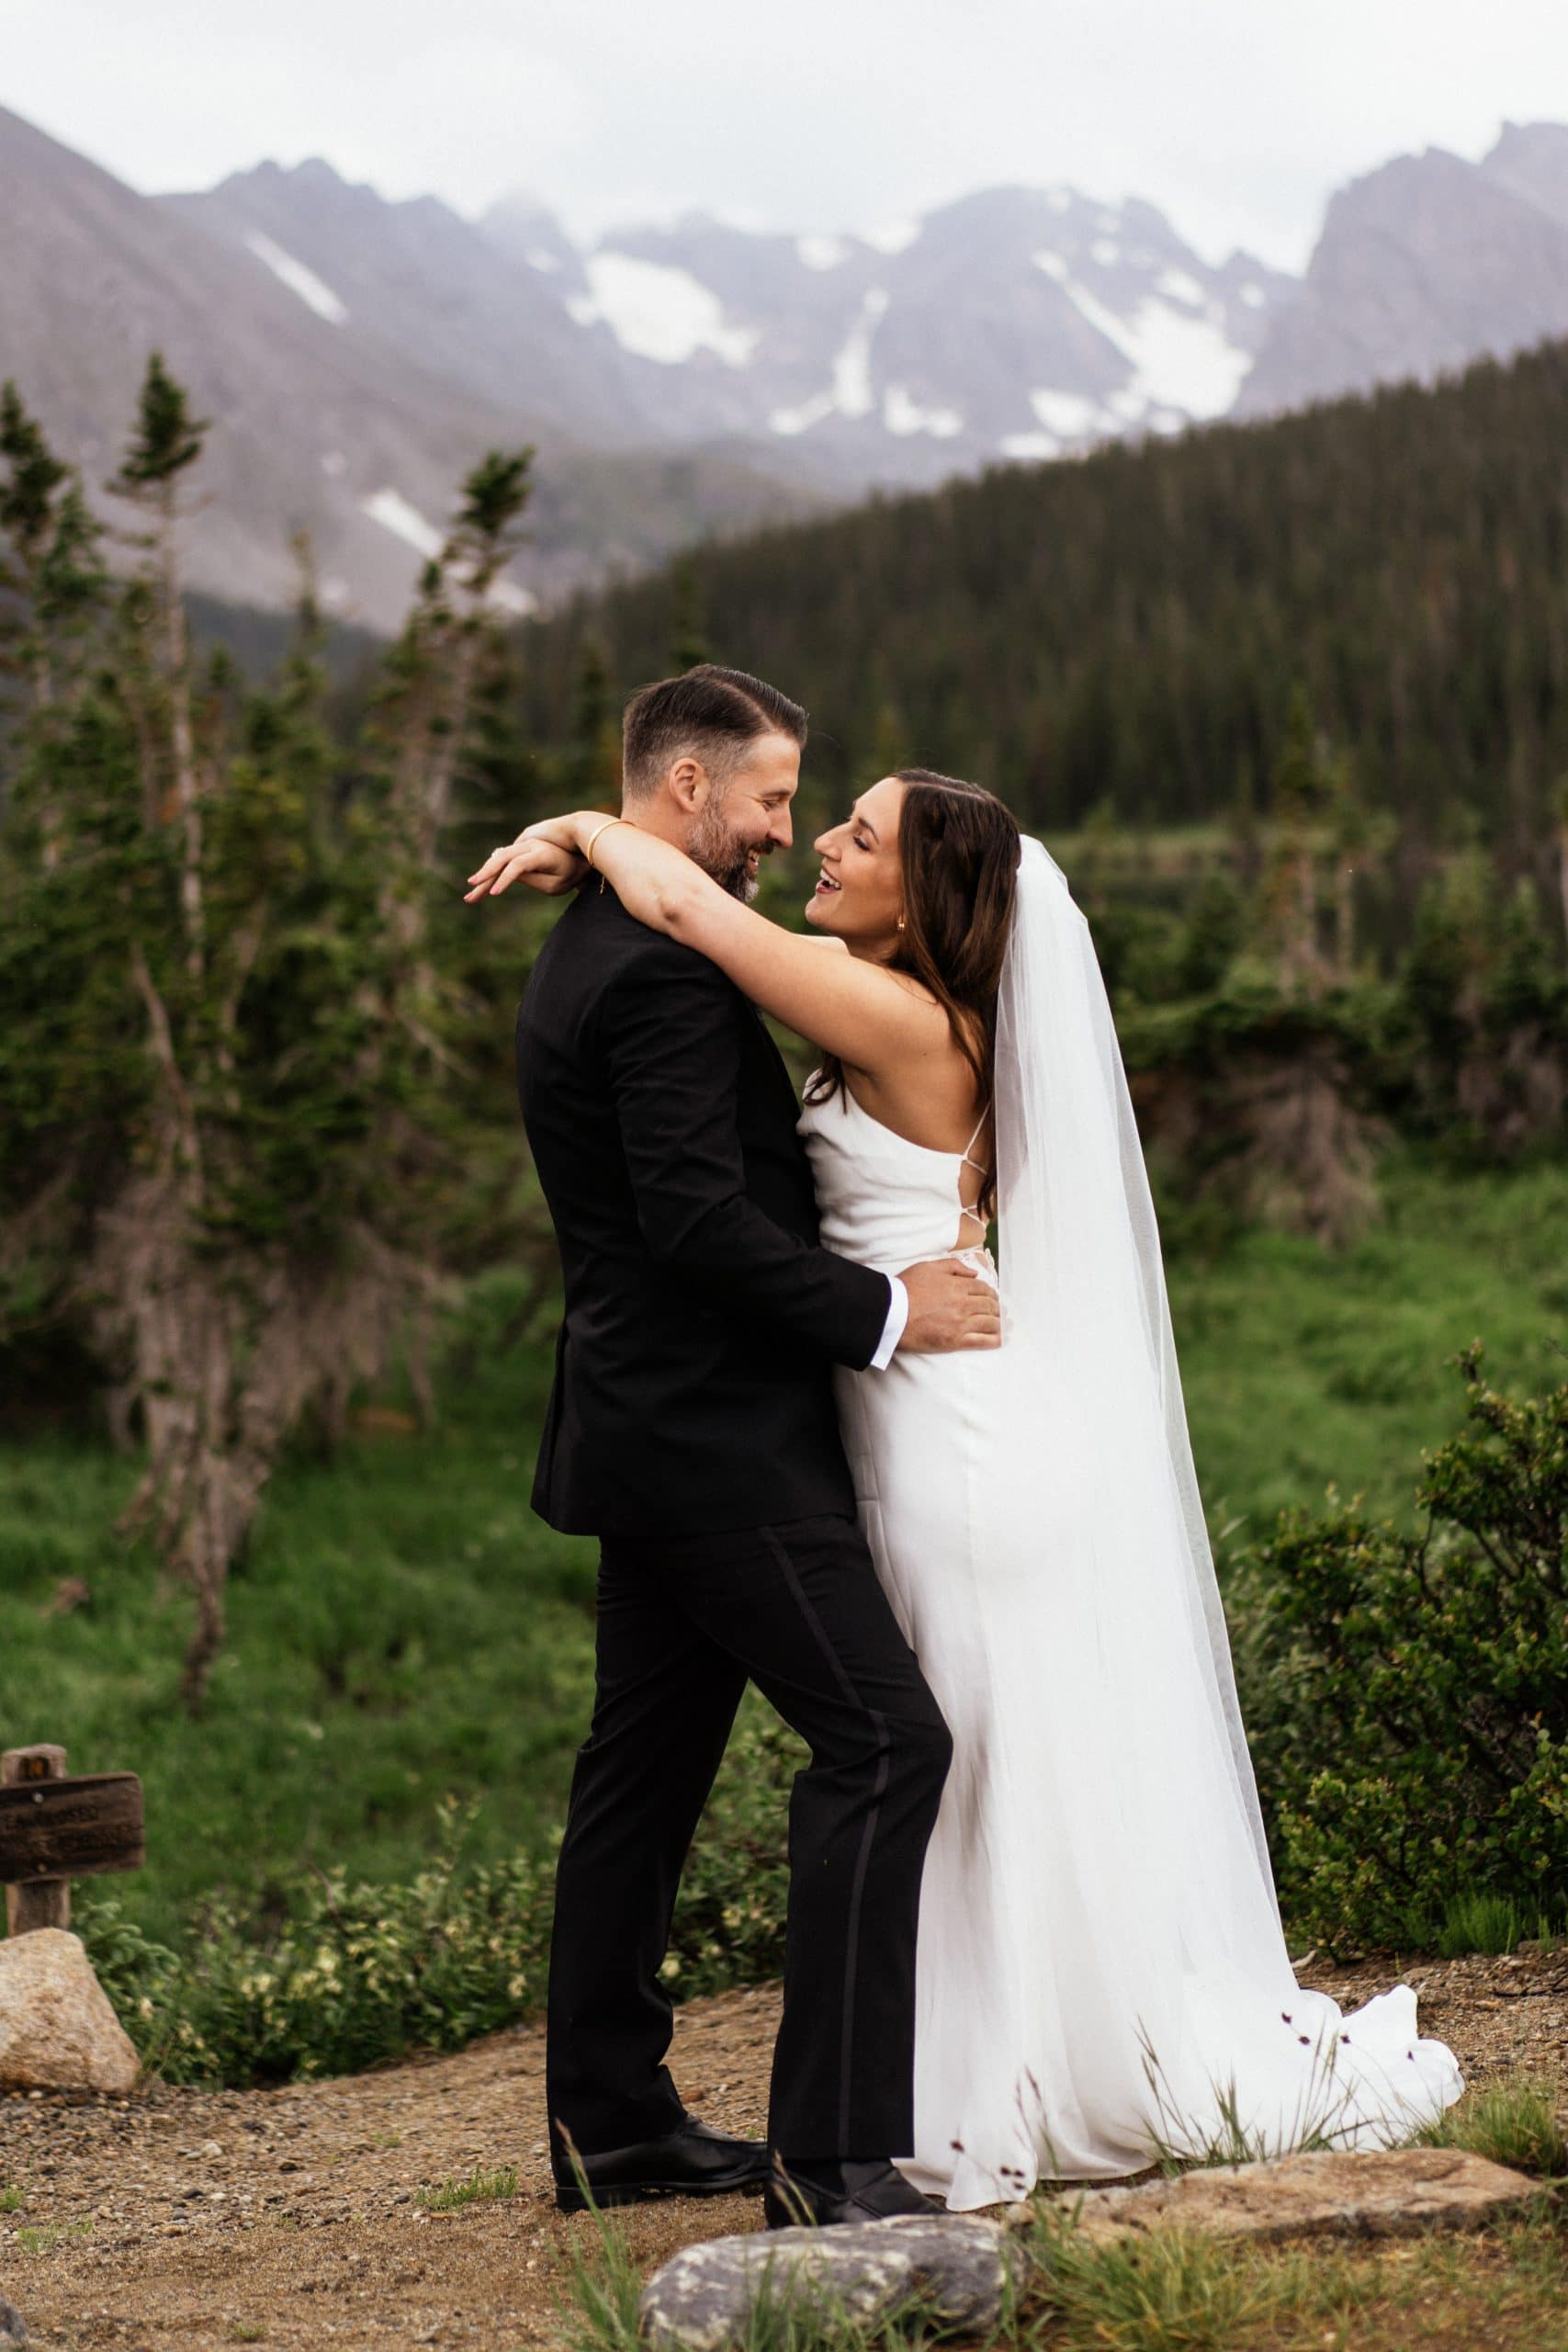 Couple getting married in Indian peaks wilderness in colorado